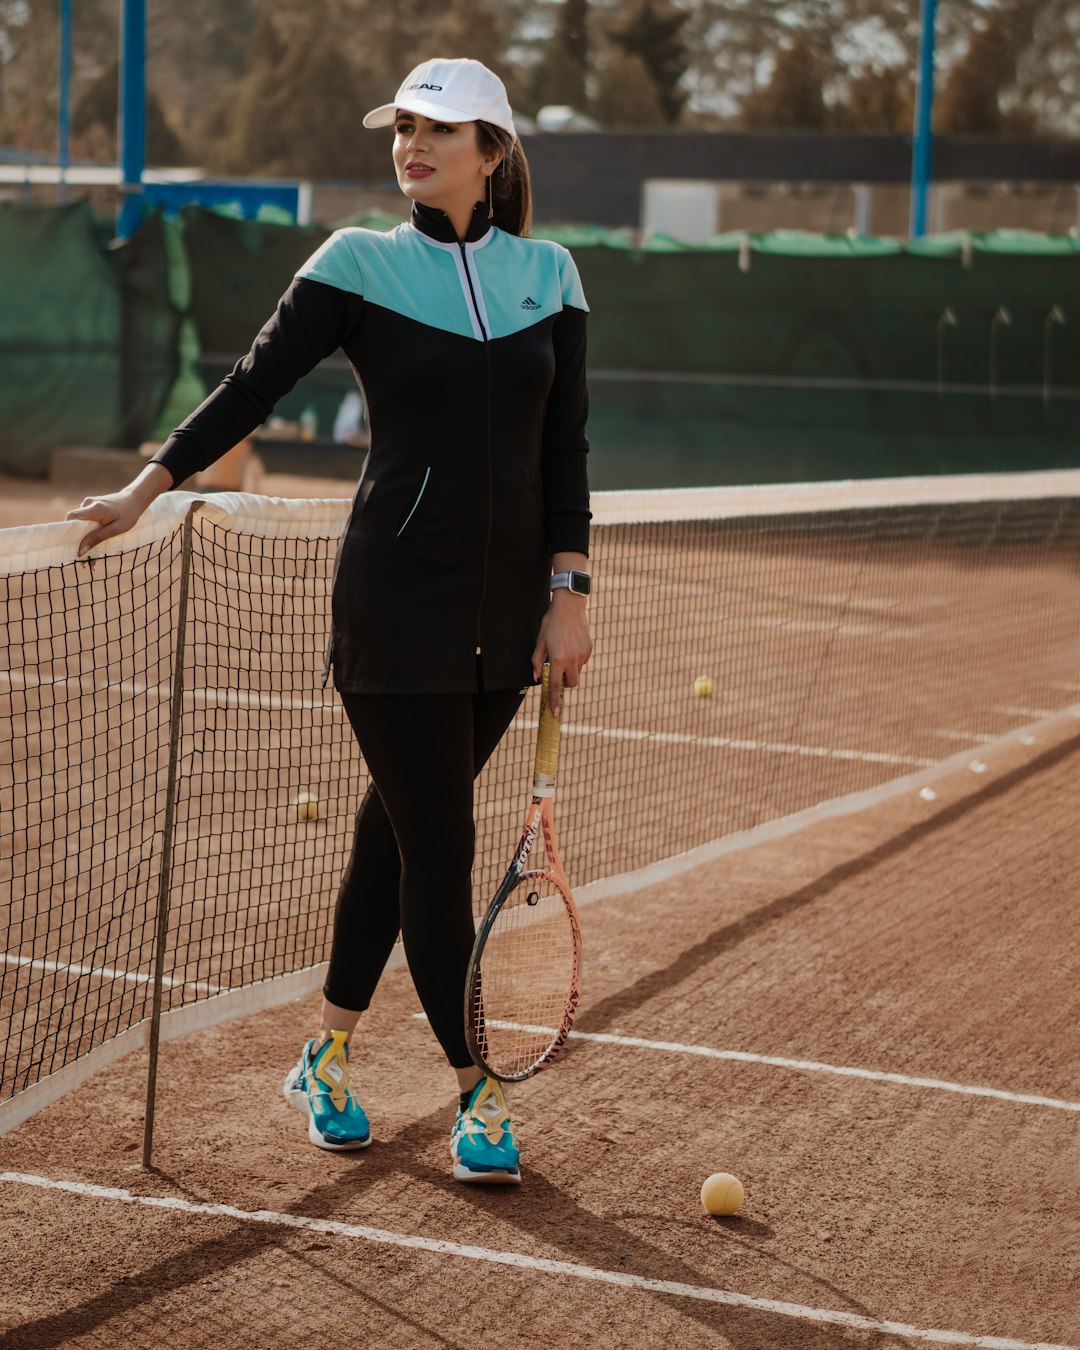 woman in black long sleeve shirt and black pants holding tennis racket